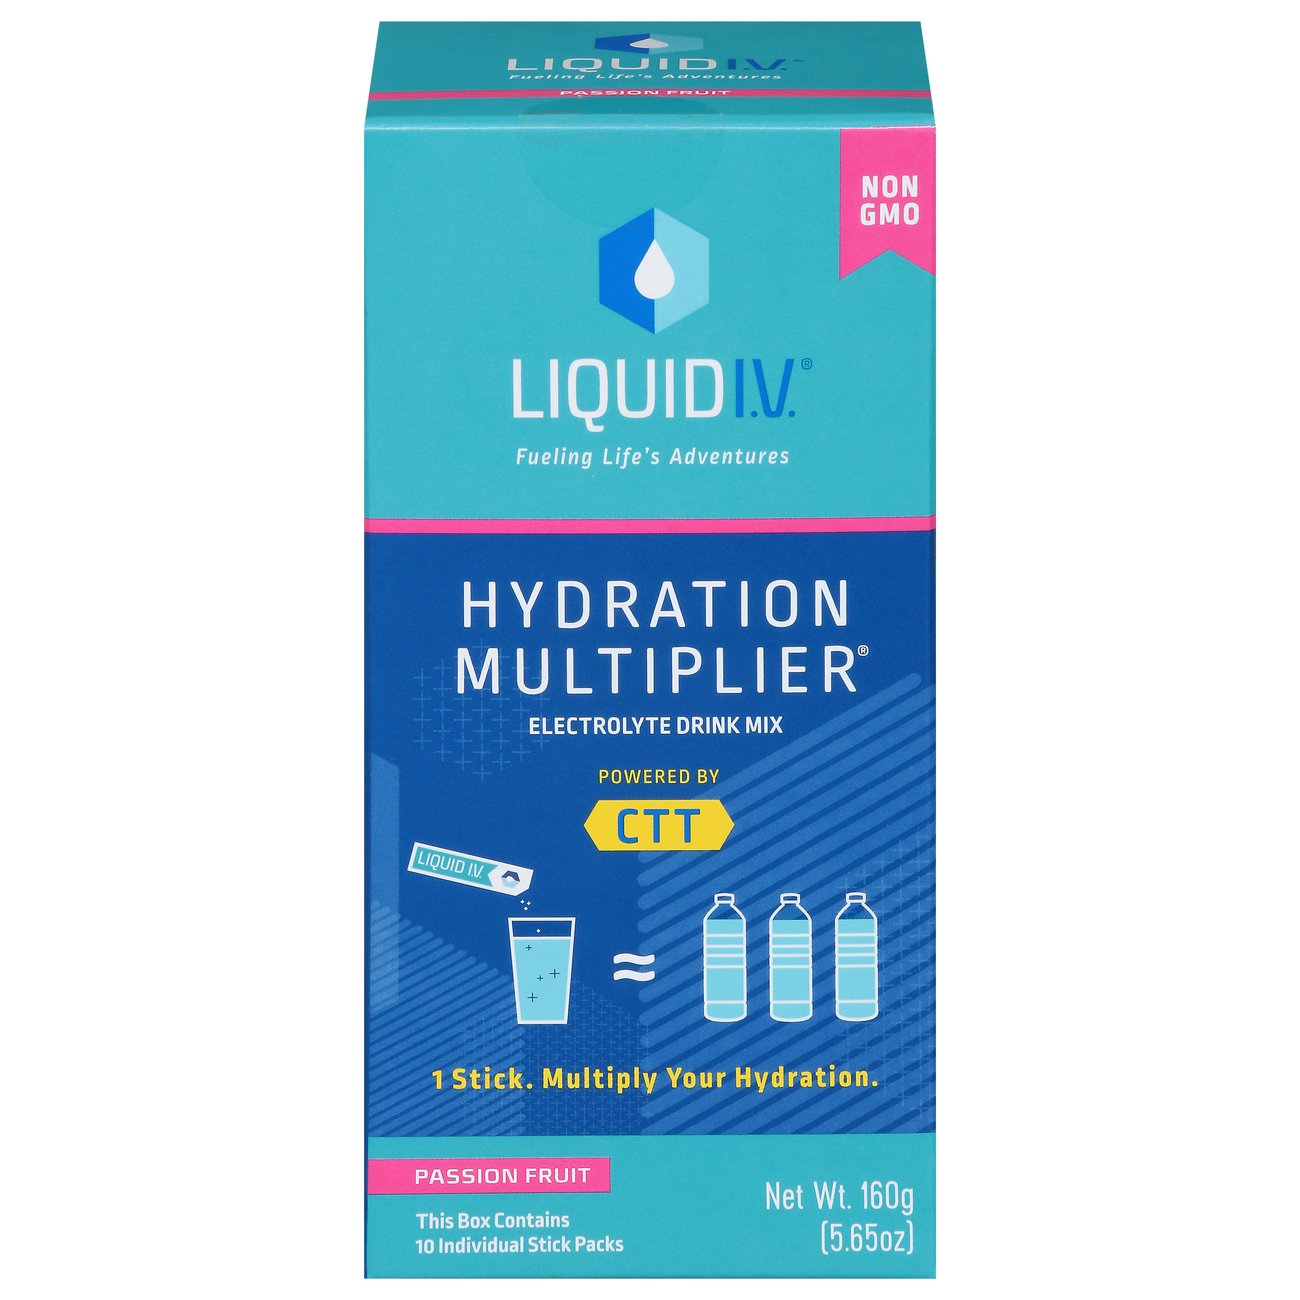 Liquid I.V. Hydration Multiplier Electrolyte Drink Mix Passion